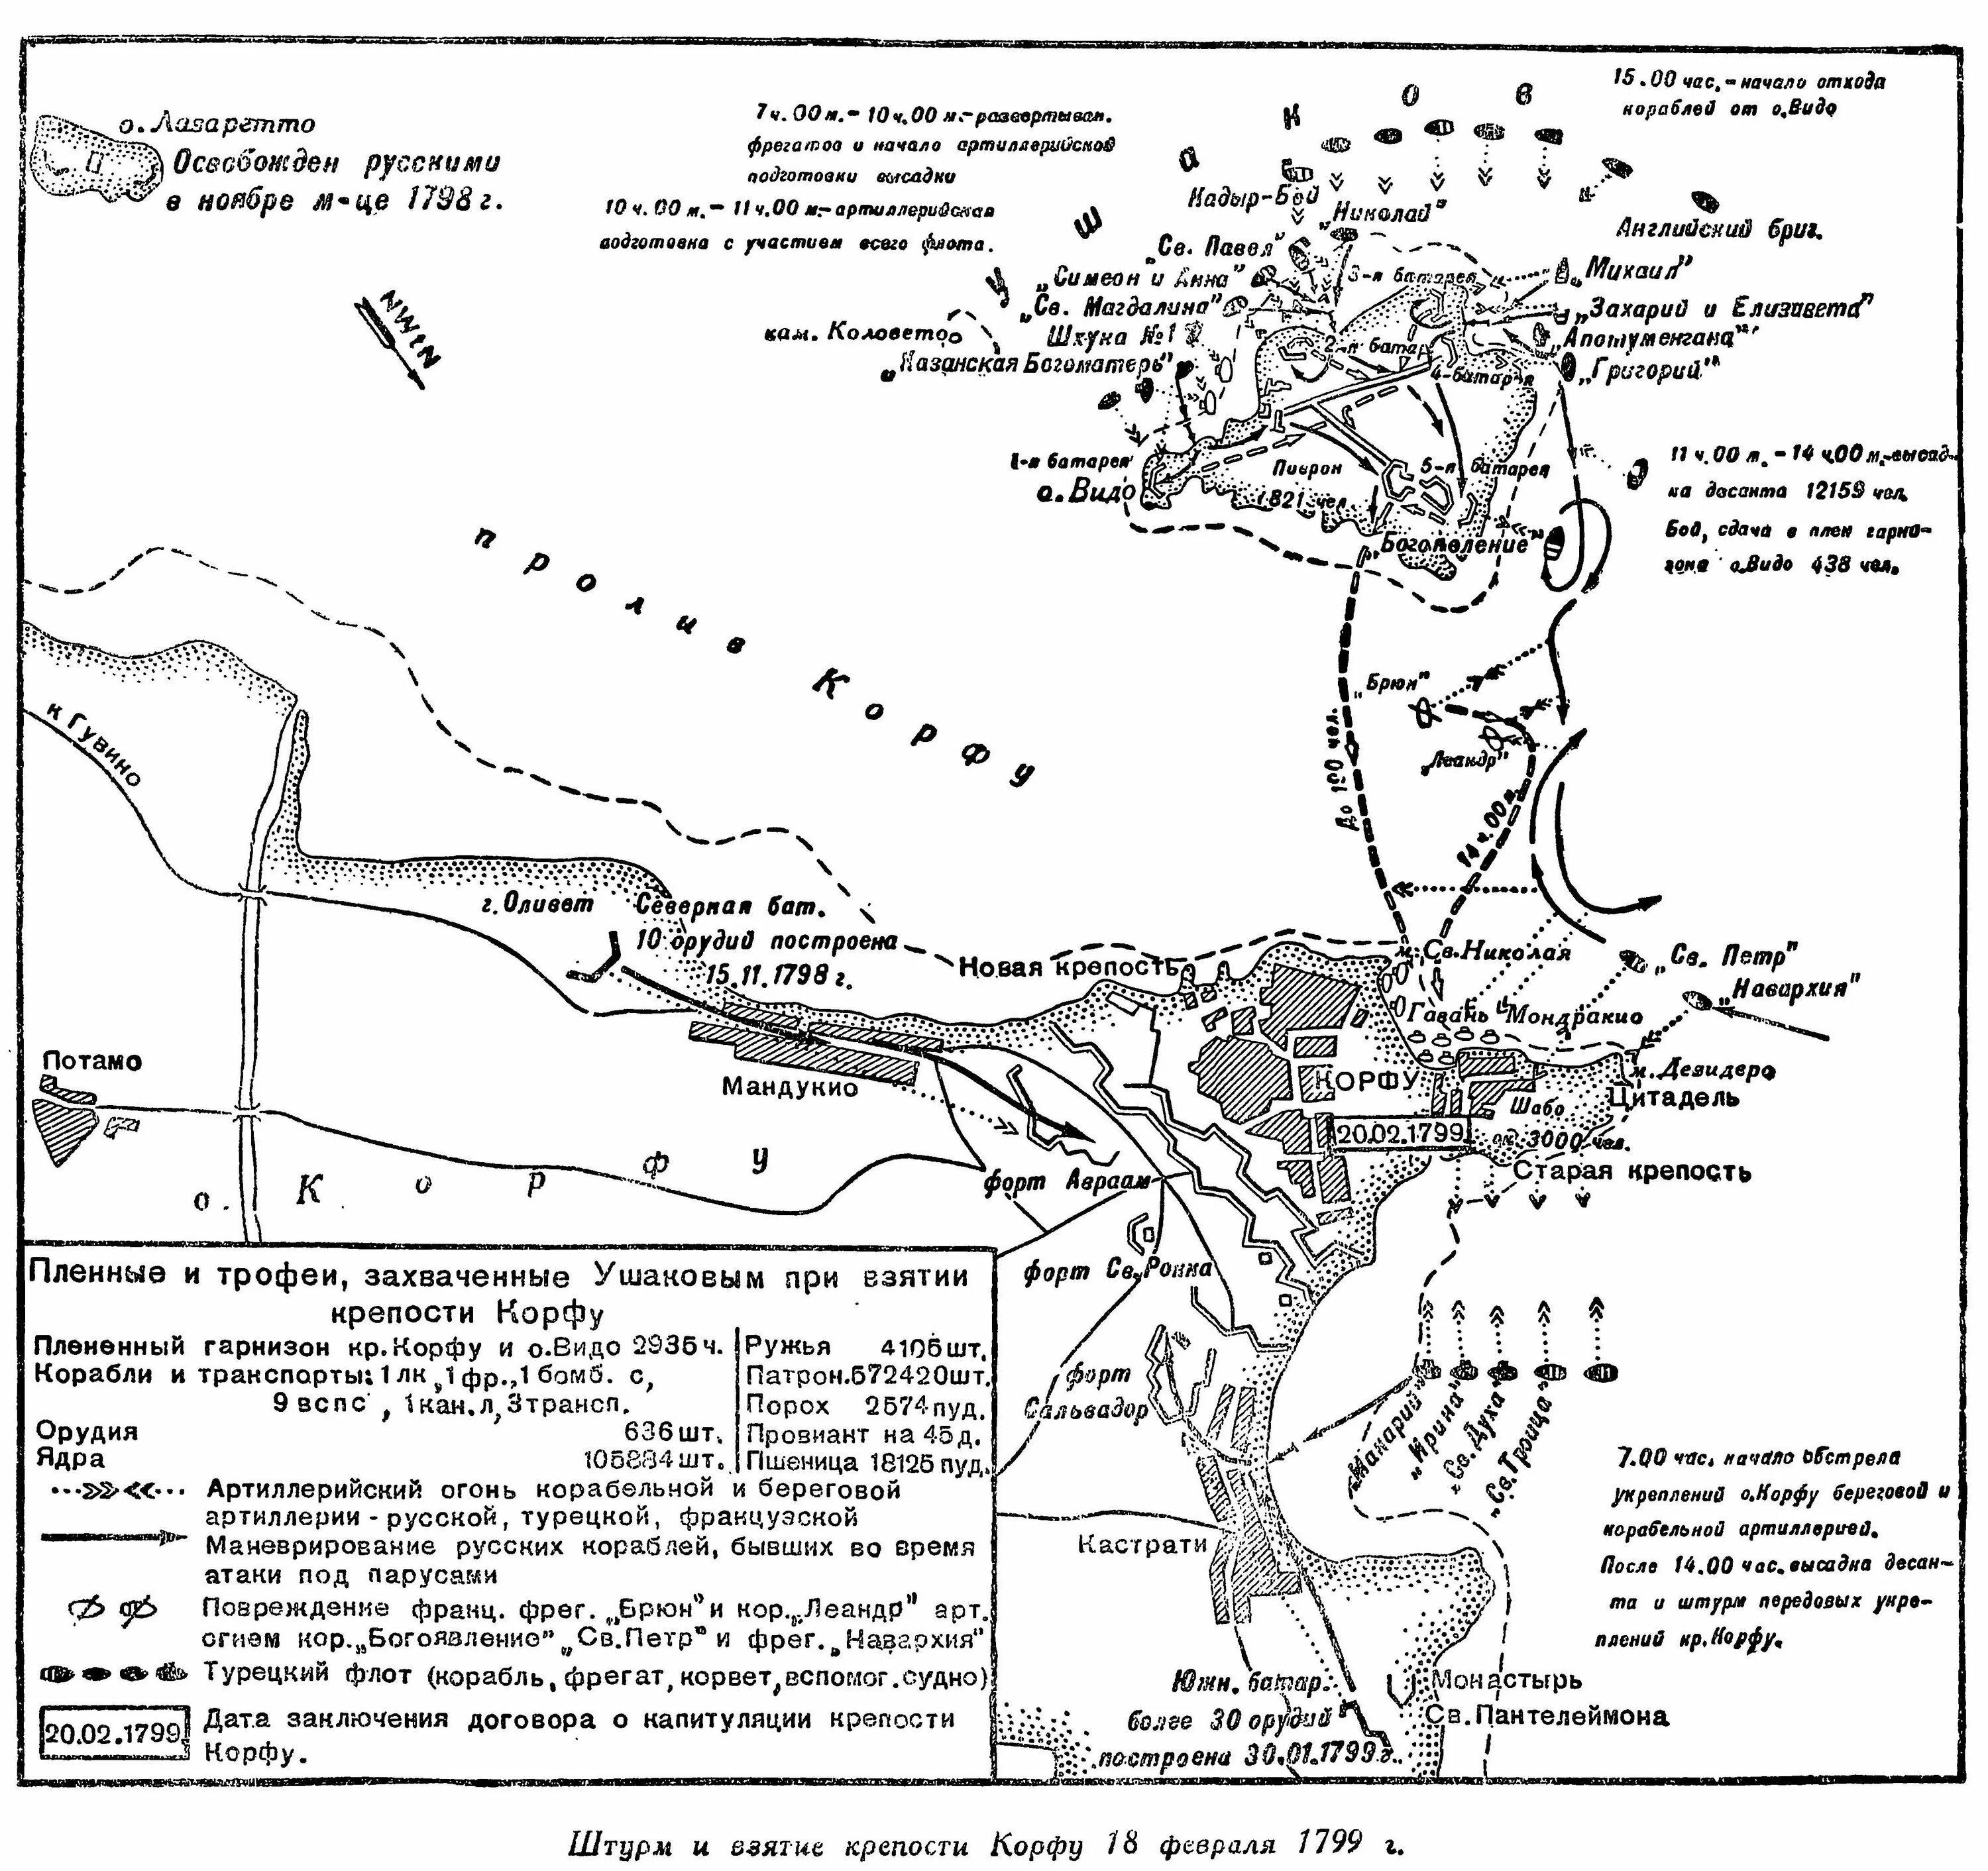 Штурм Корфу Ушаков 1799. Штурм Корфу Ушаков 1799 карта. Взятие Корфу Ушаковым.